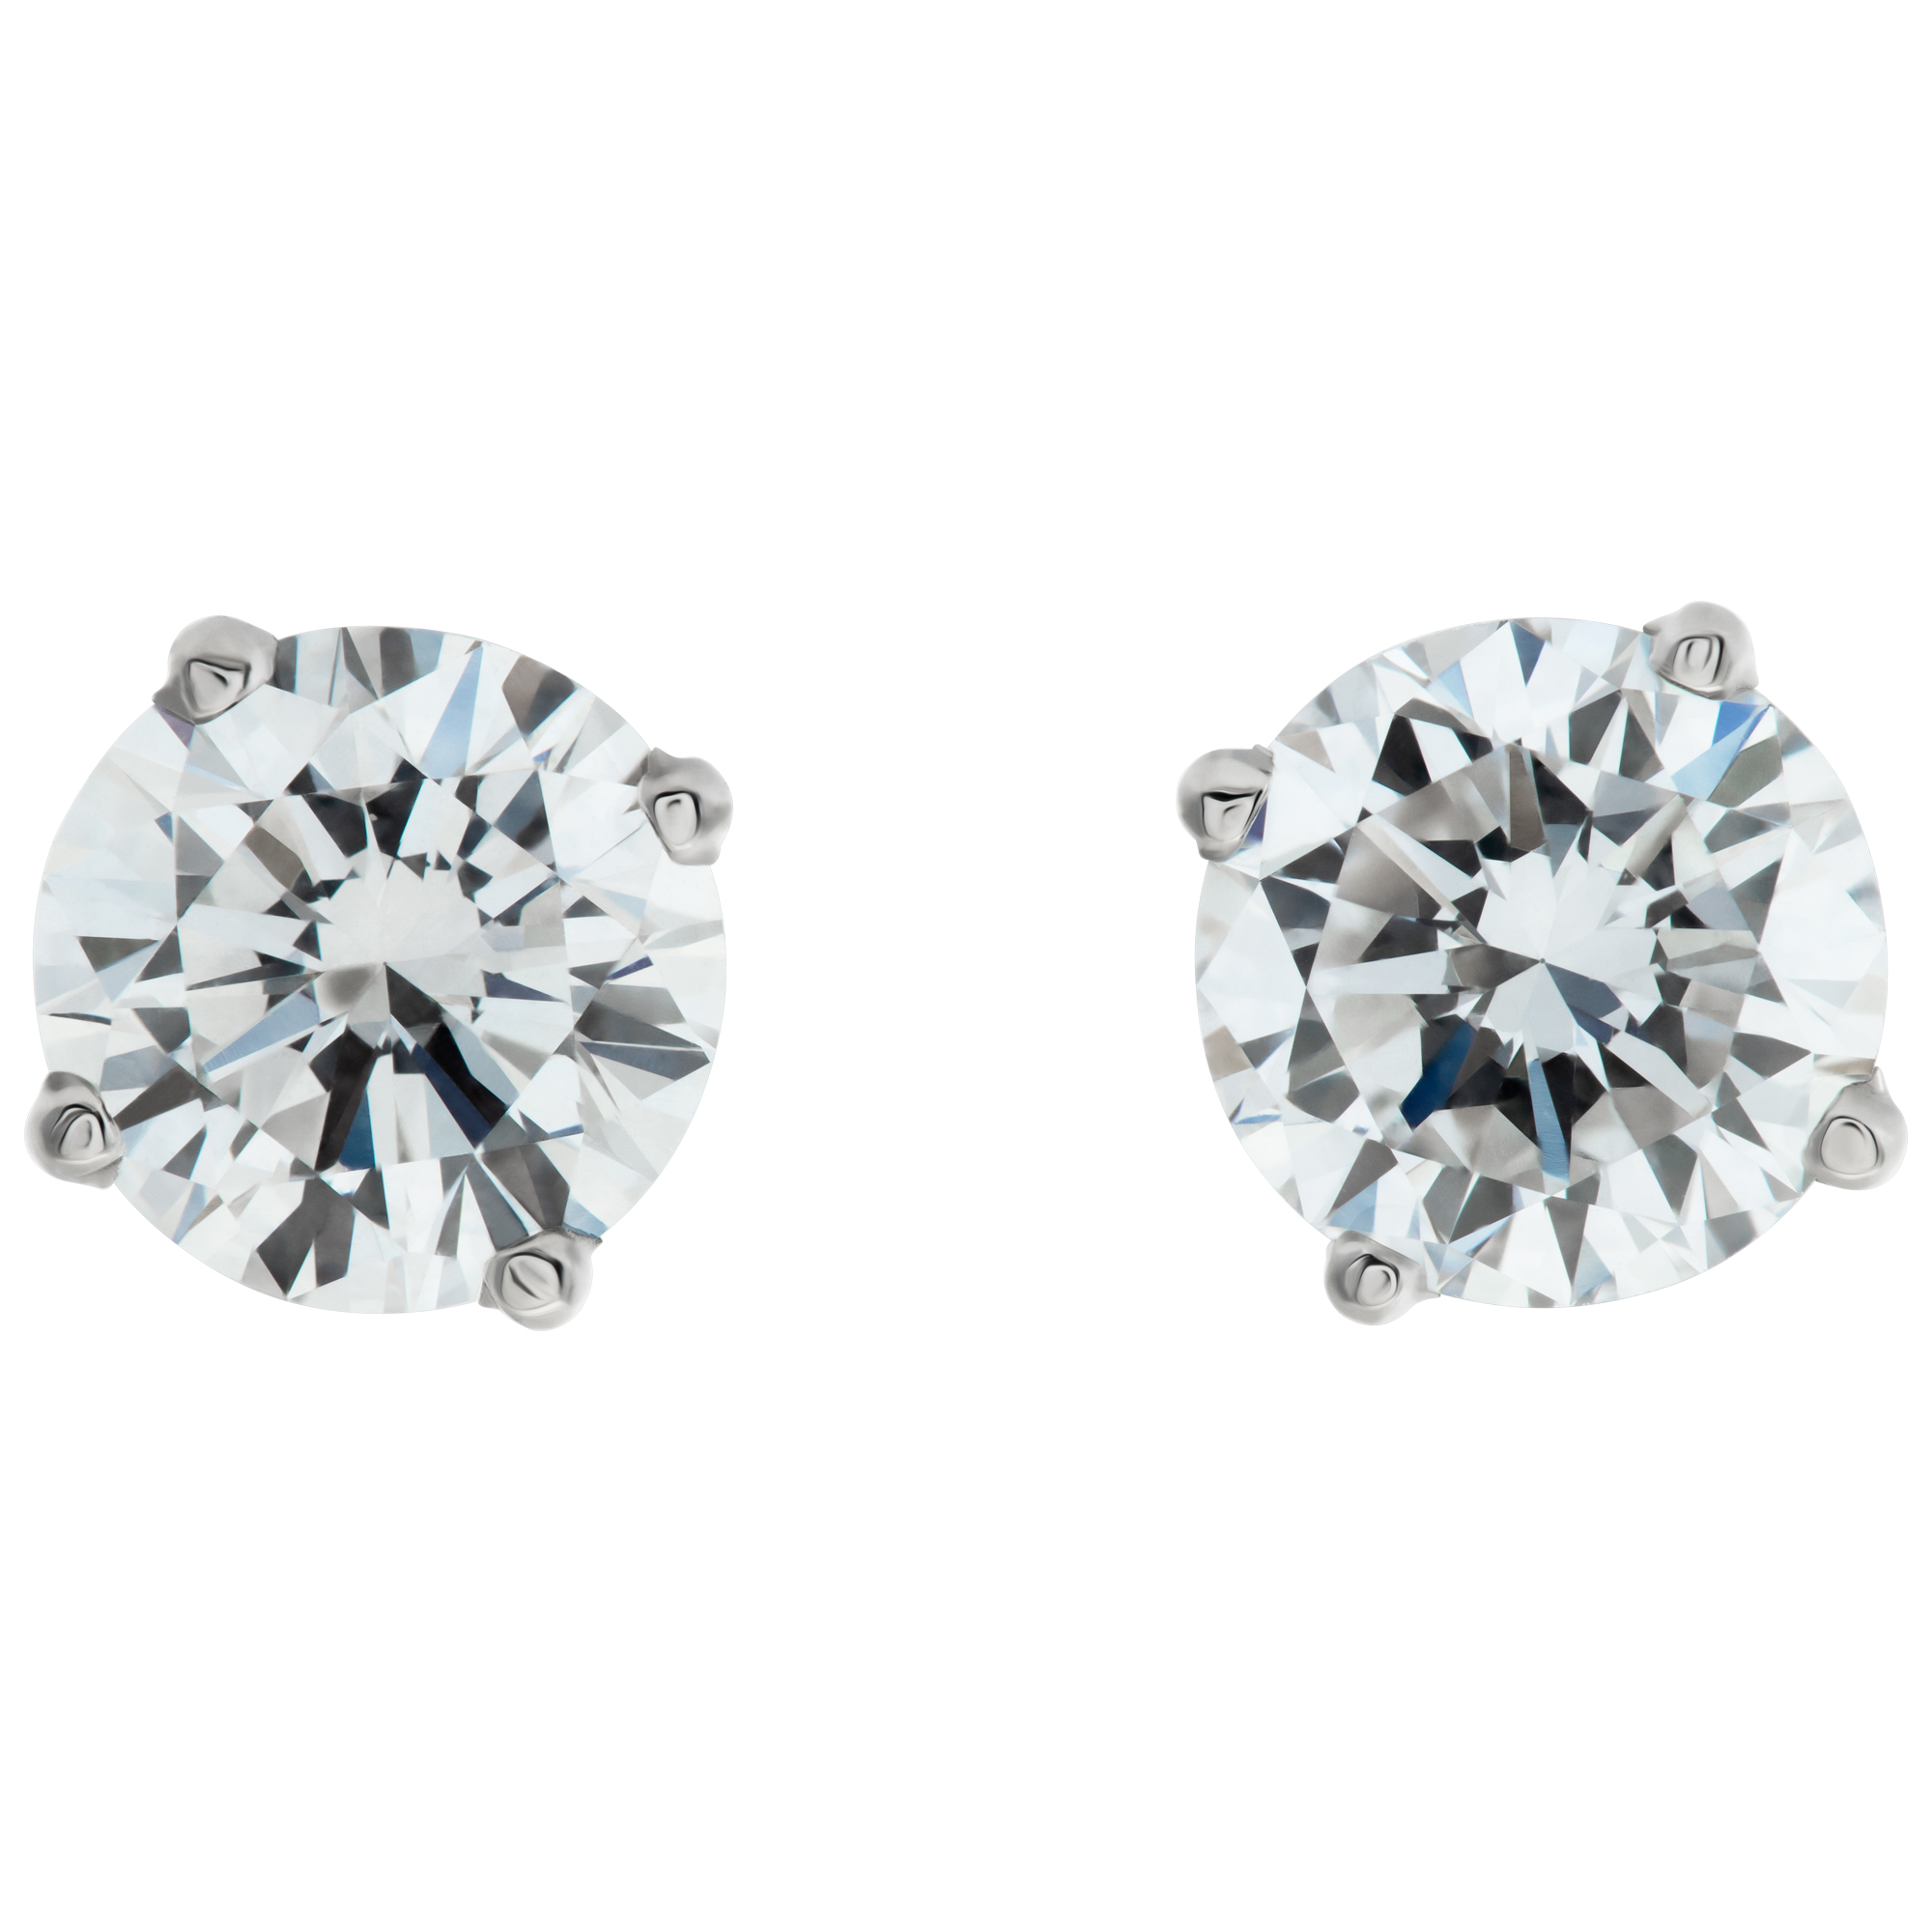 GIA certified round brilliant cut diamond studs 1.02 carat (E color, VS2 clarity) and 1.01 carat (E color, VS1 clarity